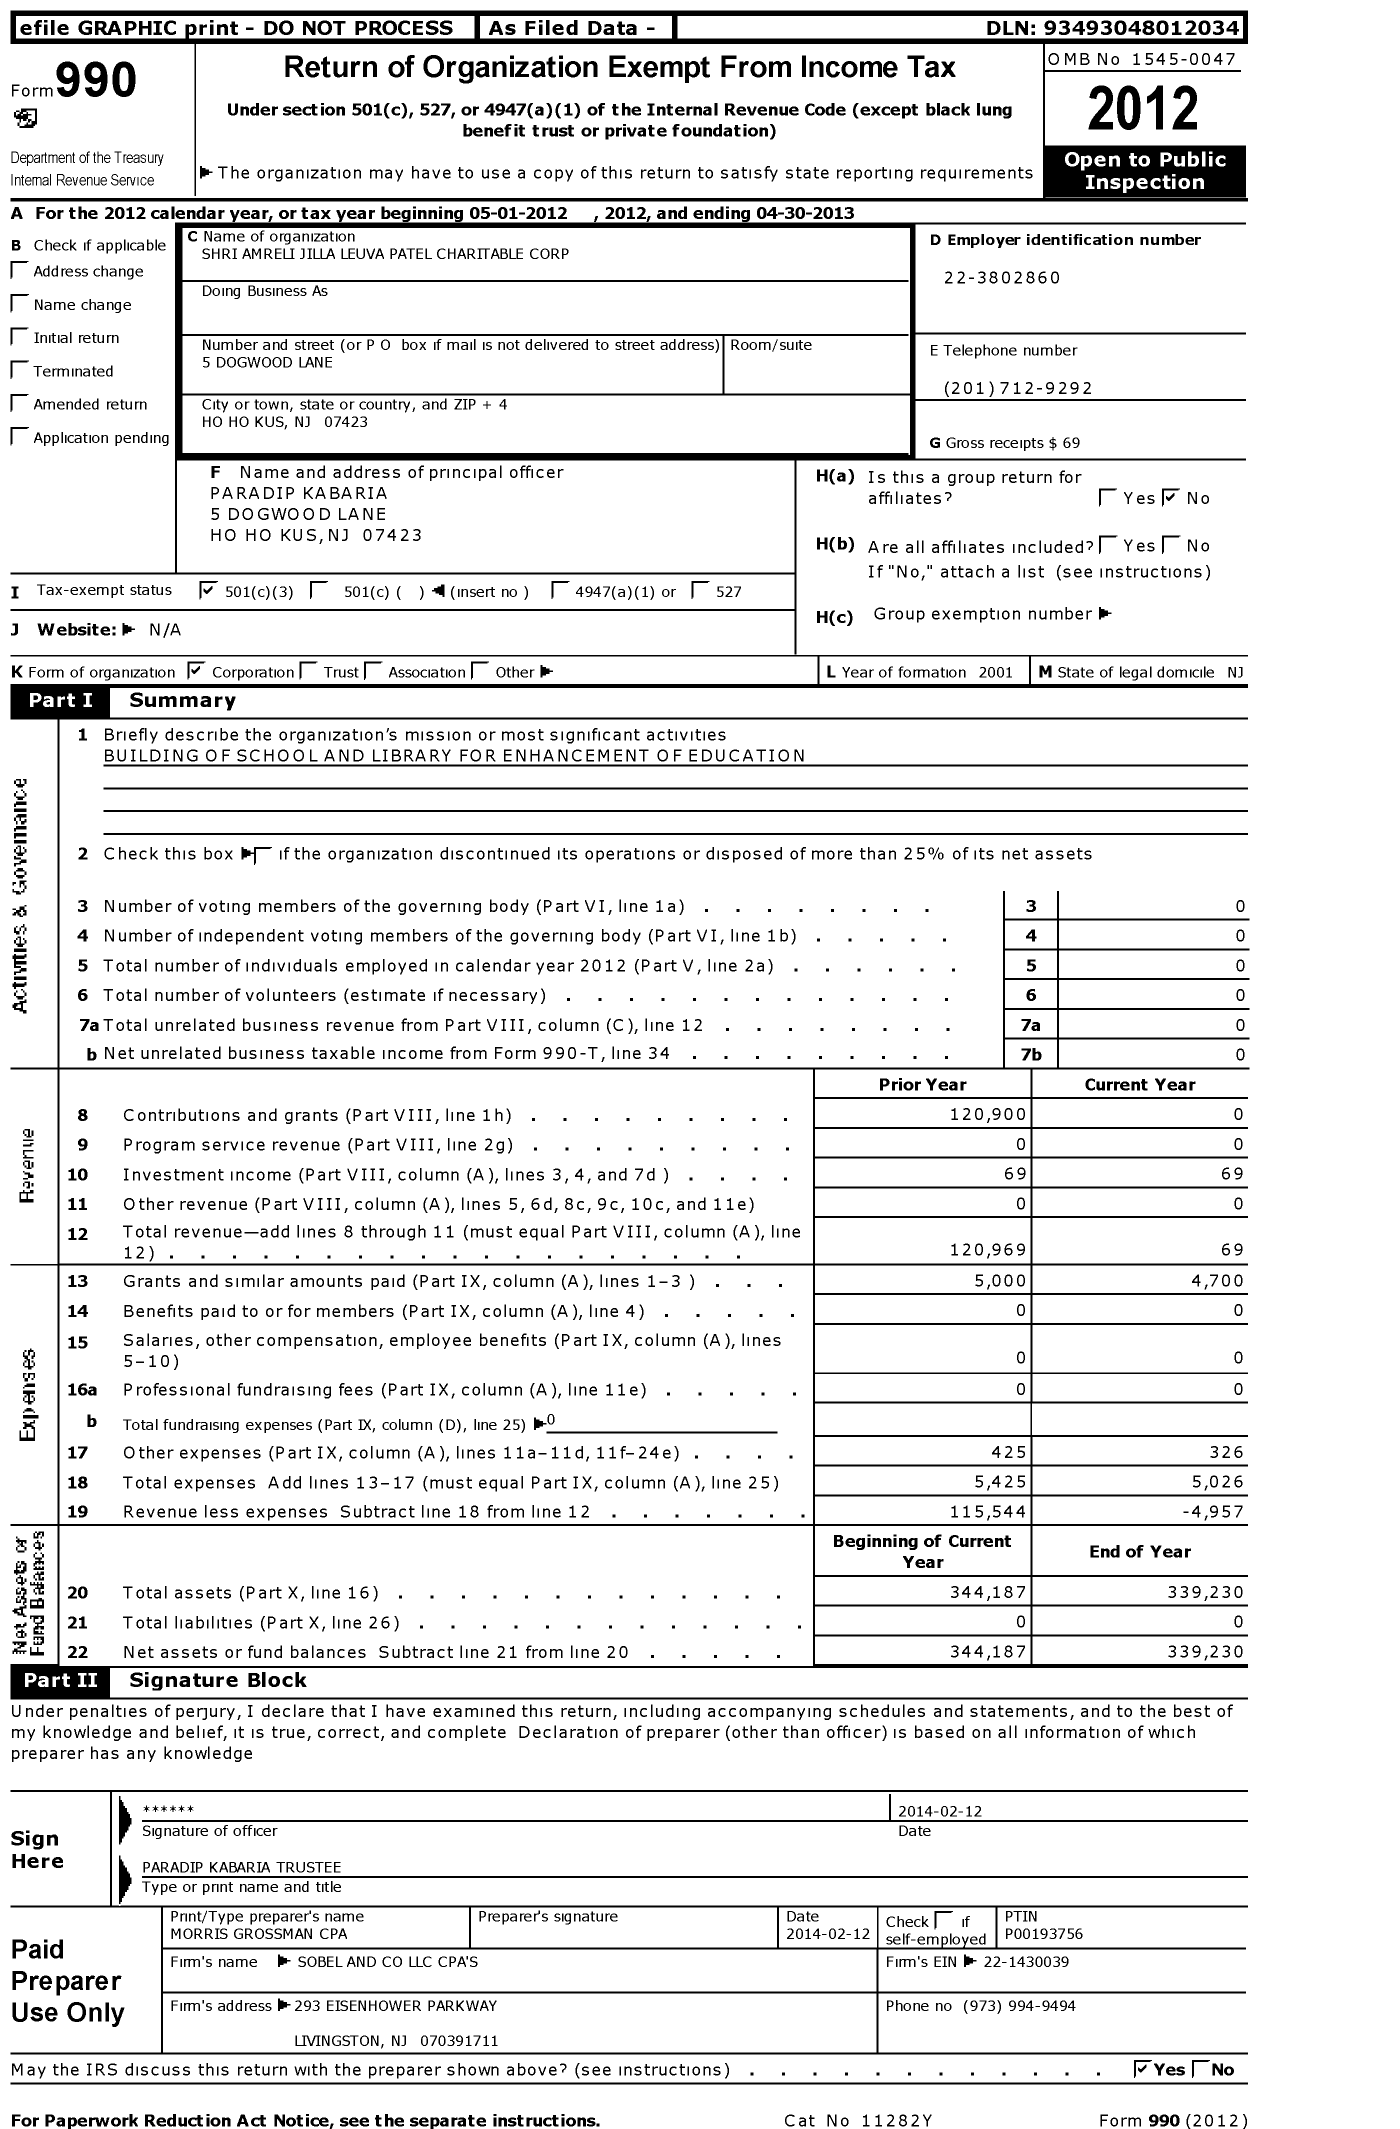 Image of first page of 2012 Form 990 for Shri Amreli Jilla Leuva Patel Charitable Corporation